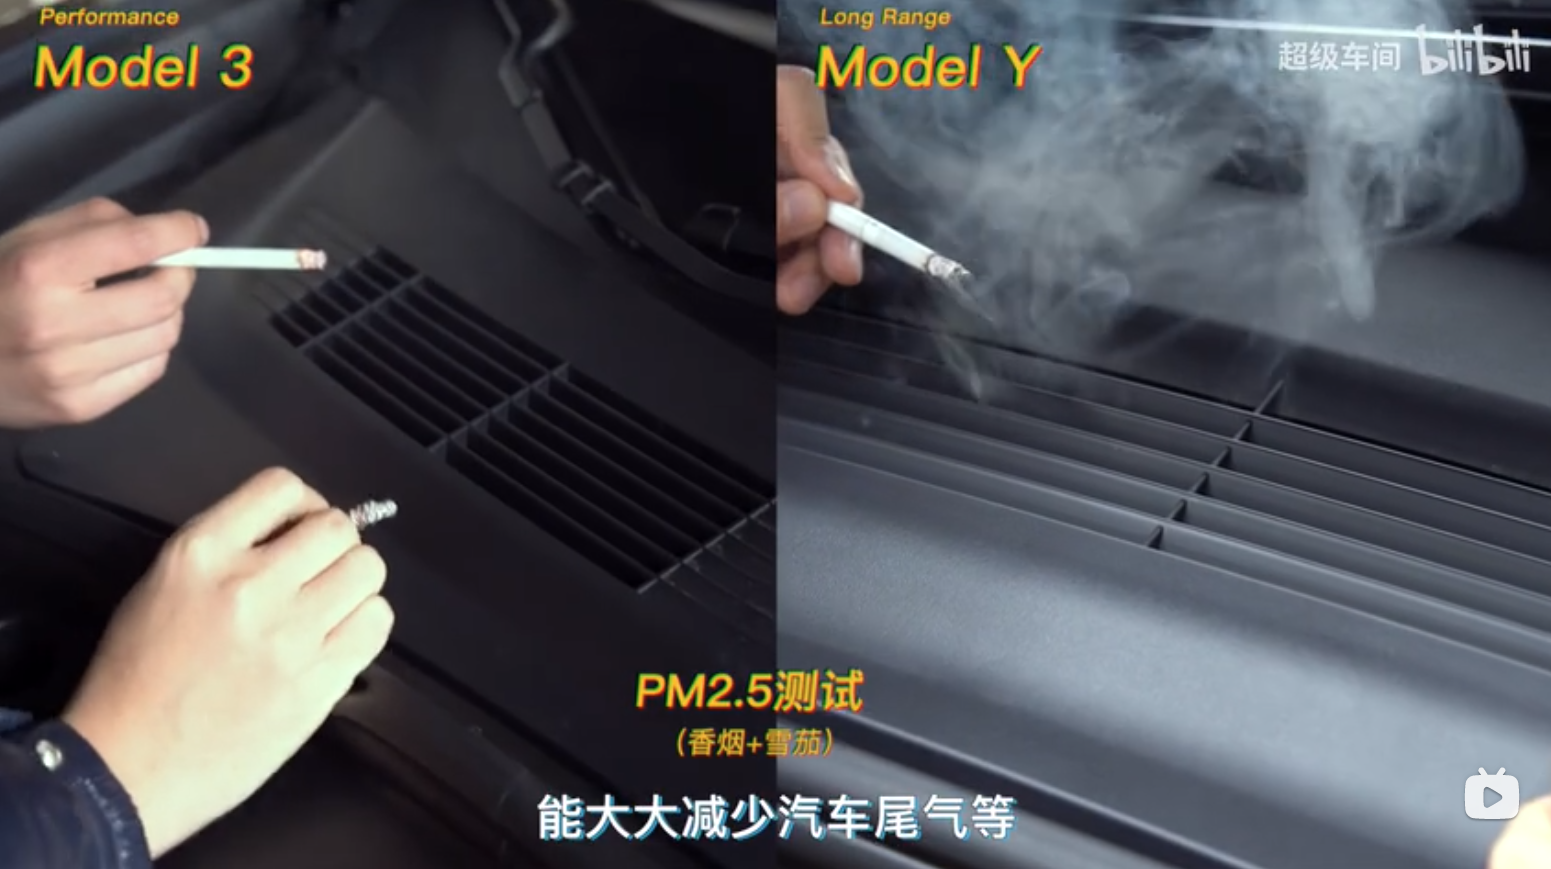 Model Y HEPA air quality test